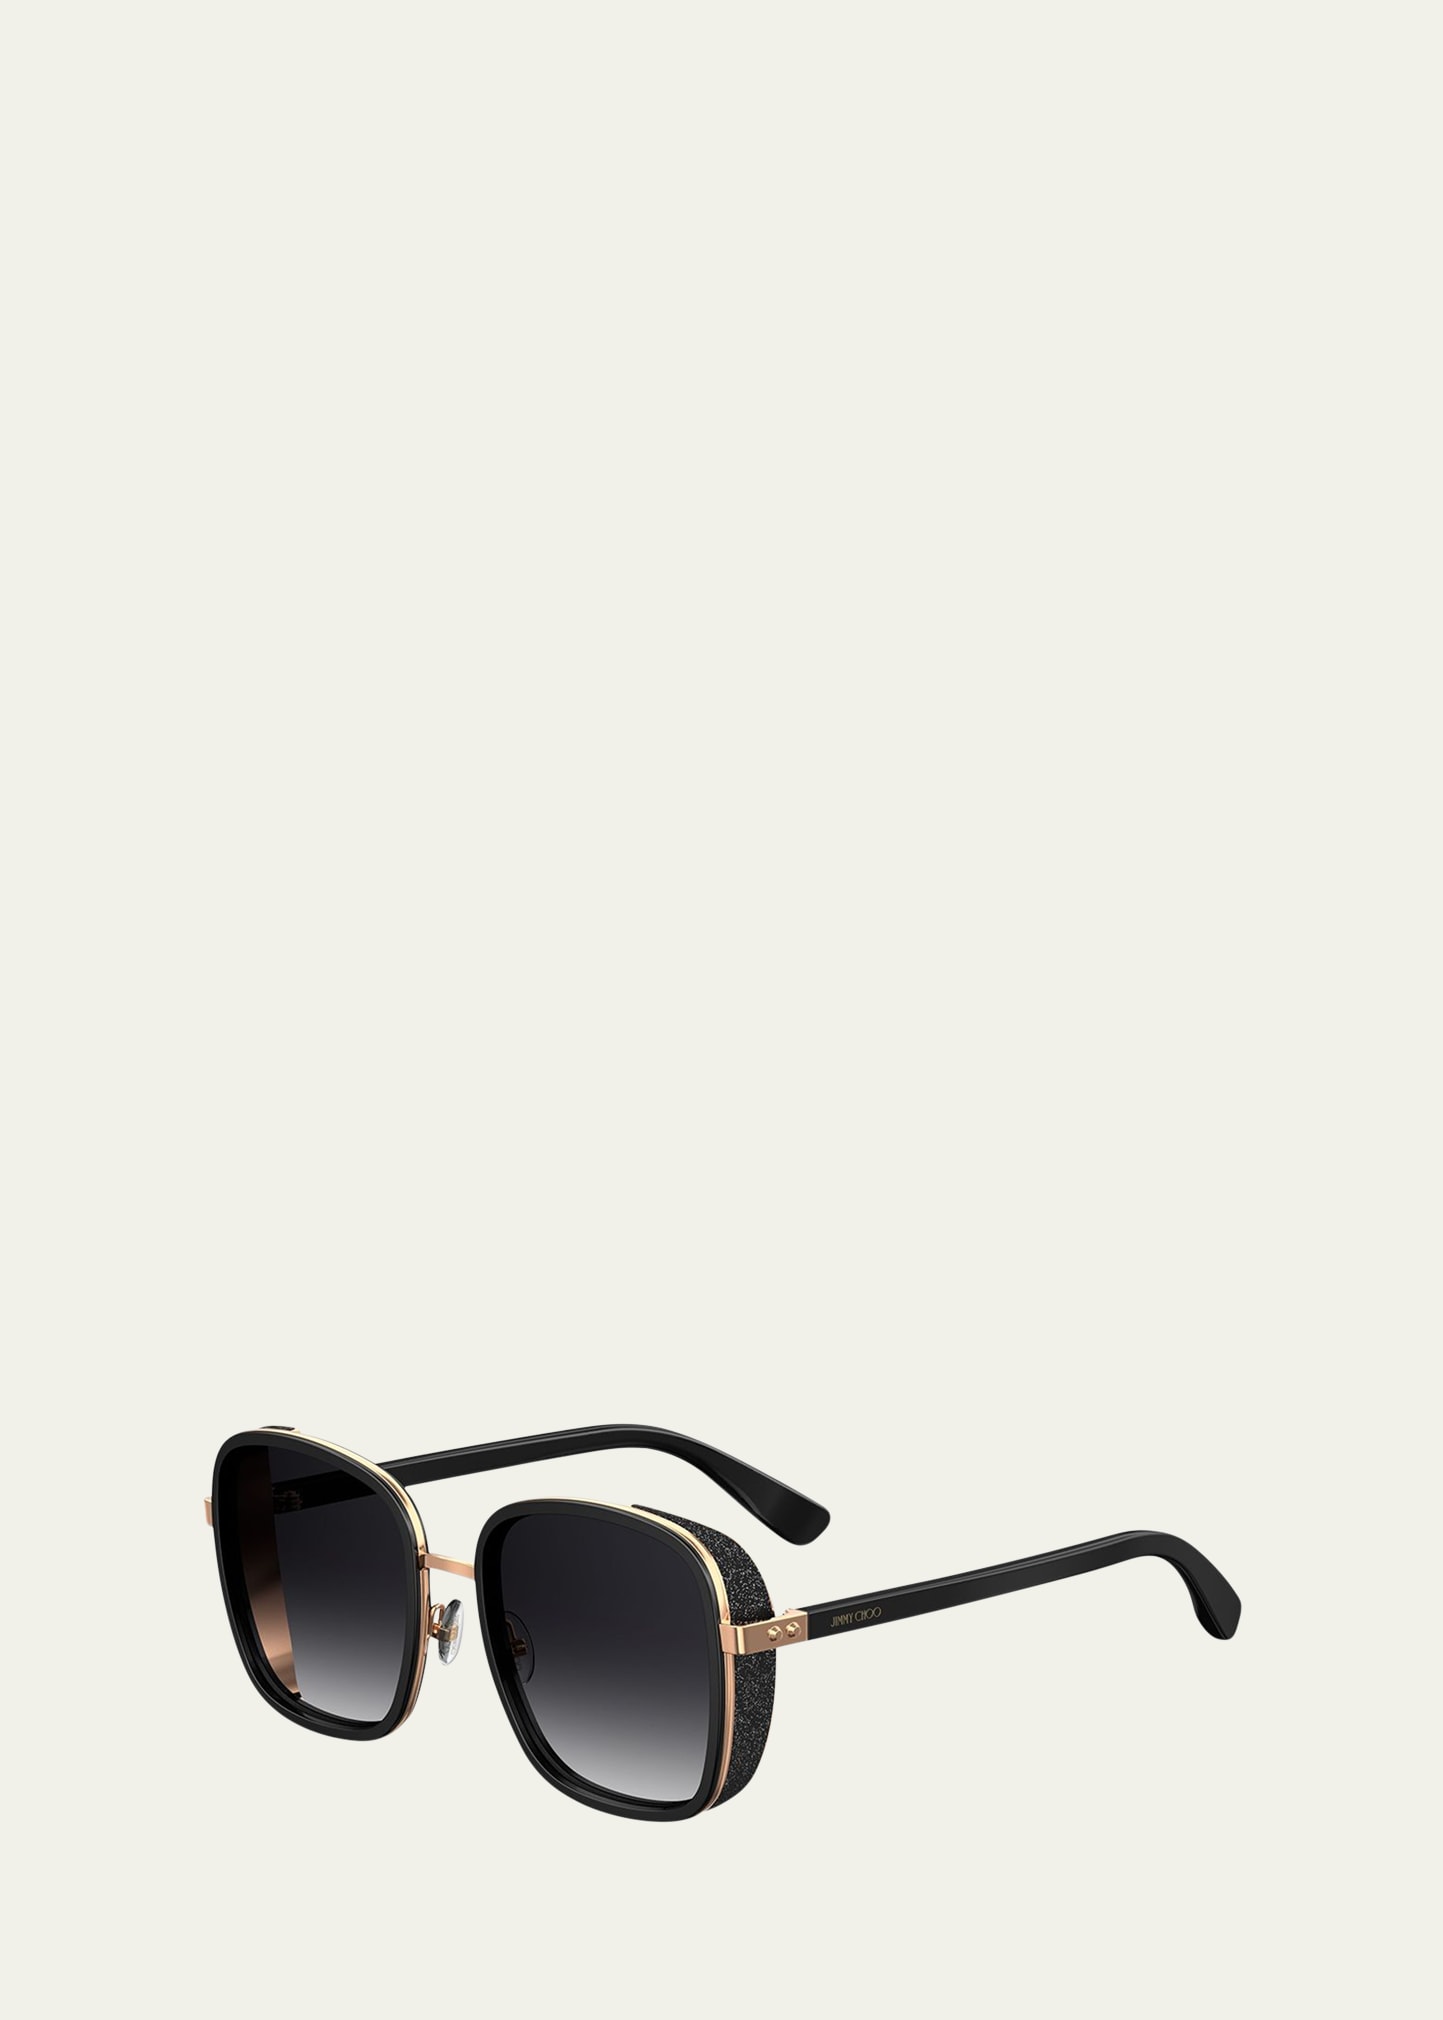 Jimmy Choo Elvas Mirrored Square Sunglasses | Bergdorf Goodman